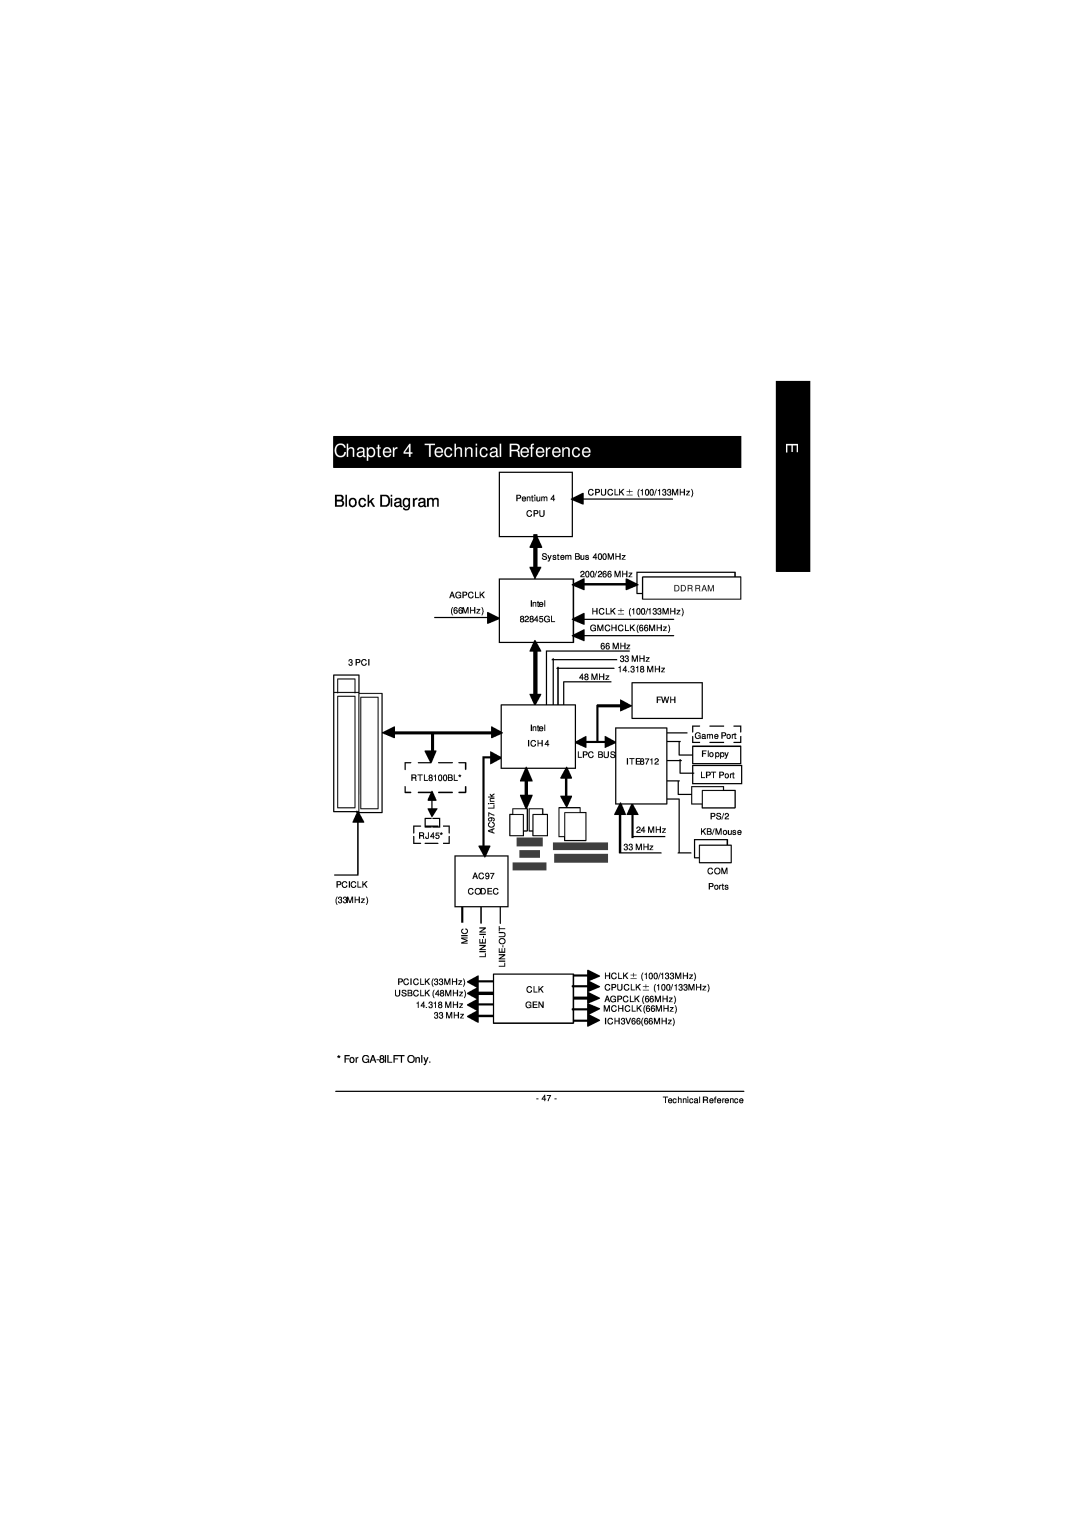 Gigabyte GA-8ILFT, P4 Titan-DDR Motherboard user manual RevisionChapter History4 Technical Reference, Block Diagram 